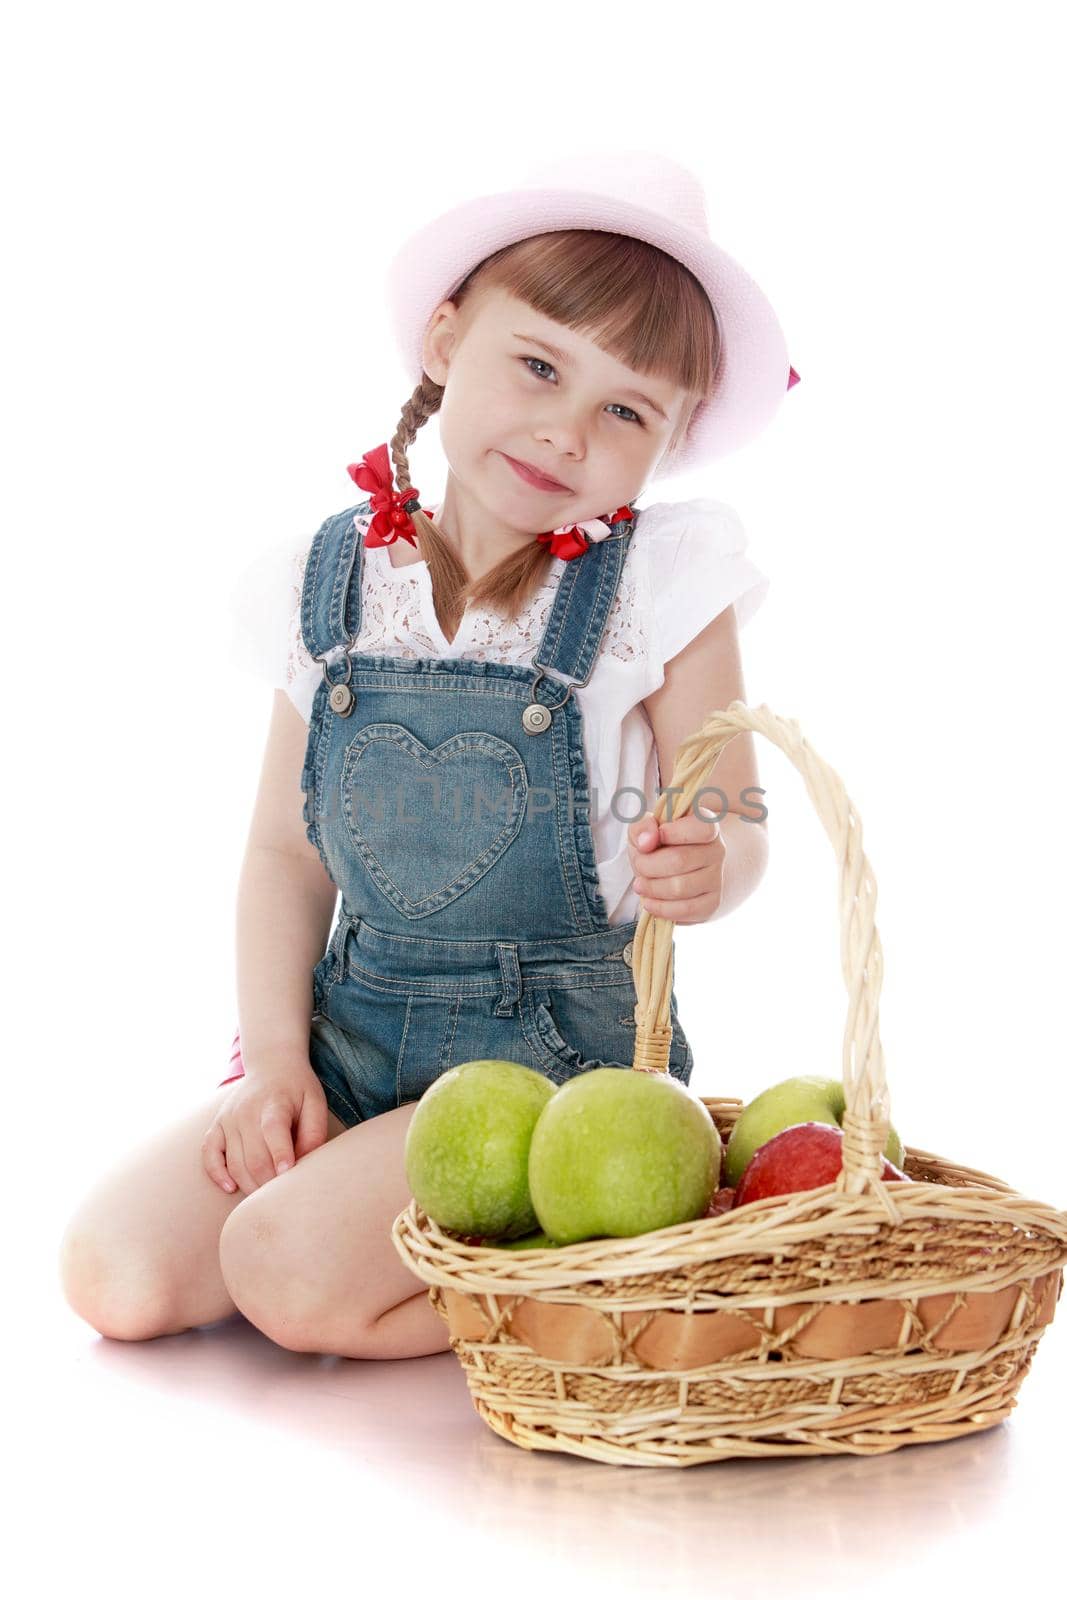 girl with a basket of apples by kolesnikov_studio